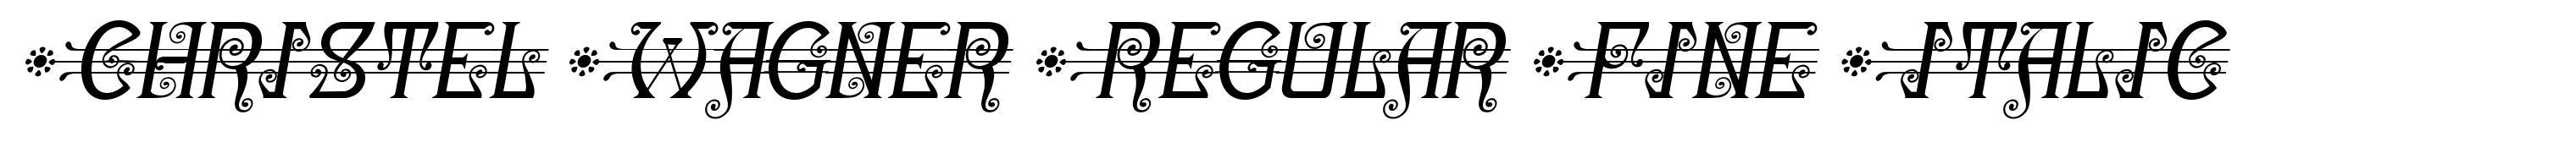 Christel Wagner Regular Fine Italic